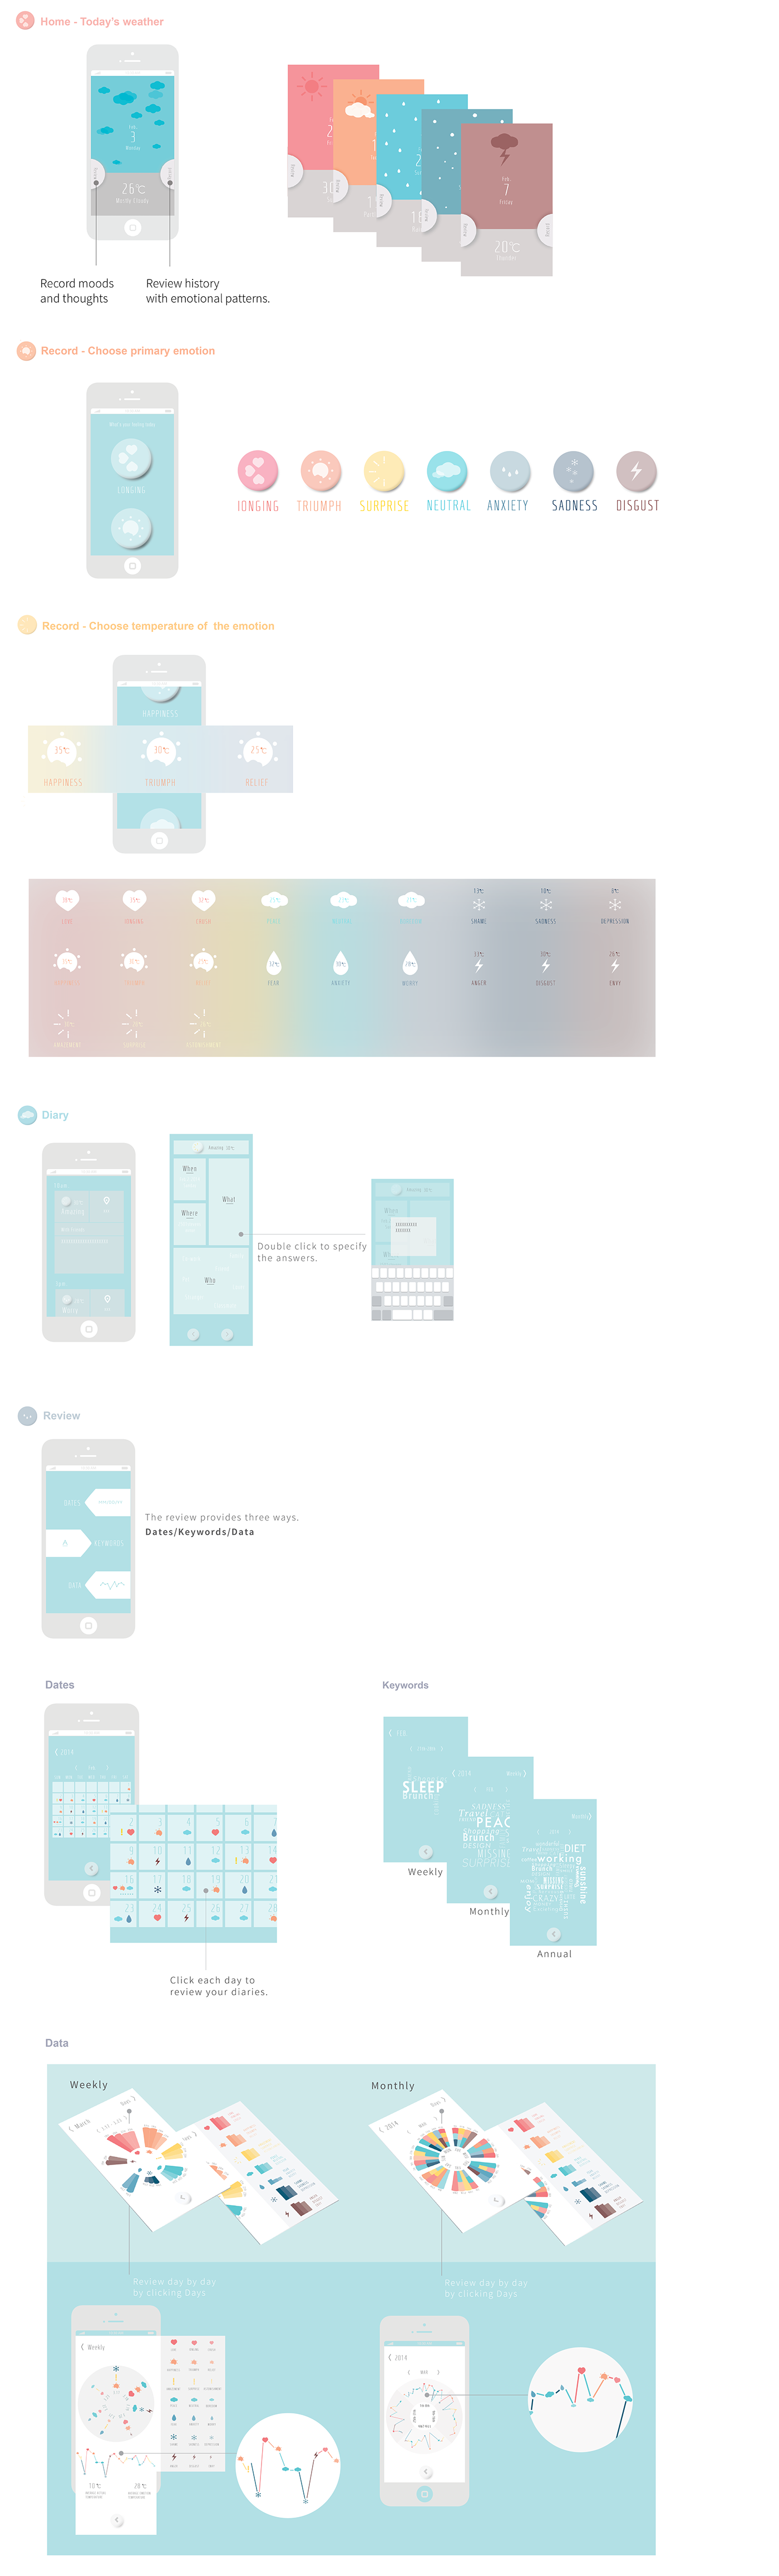 user interface Icon emotion information design infographic app design app Mobile Application User Experience Design